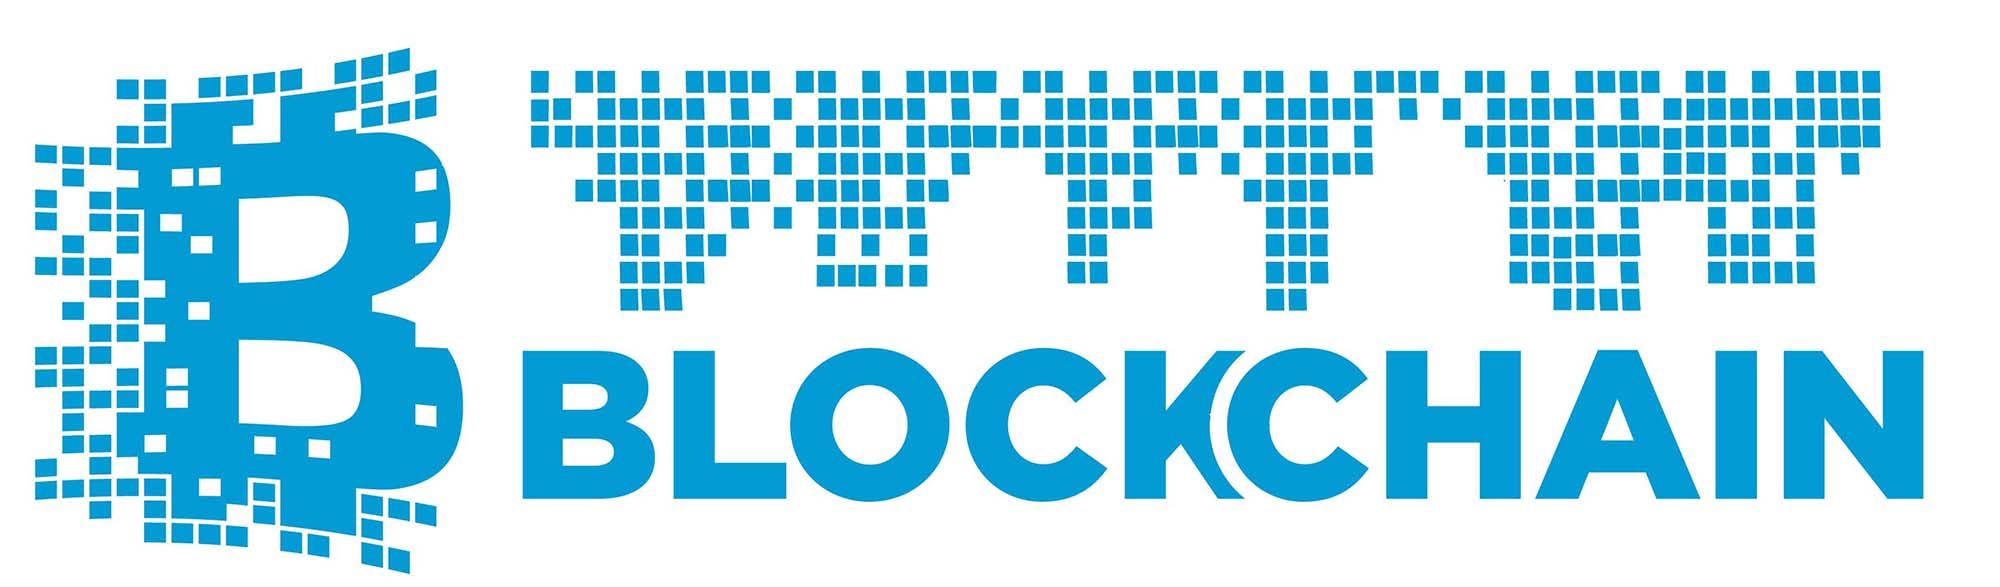 Blockchain-Logo-Blue6.jpg